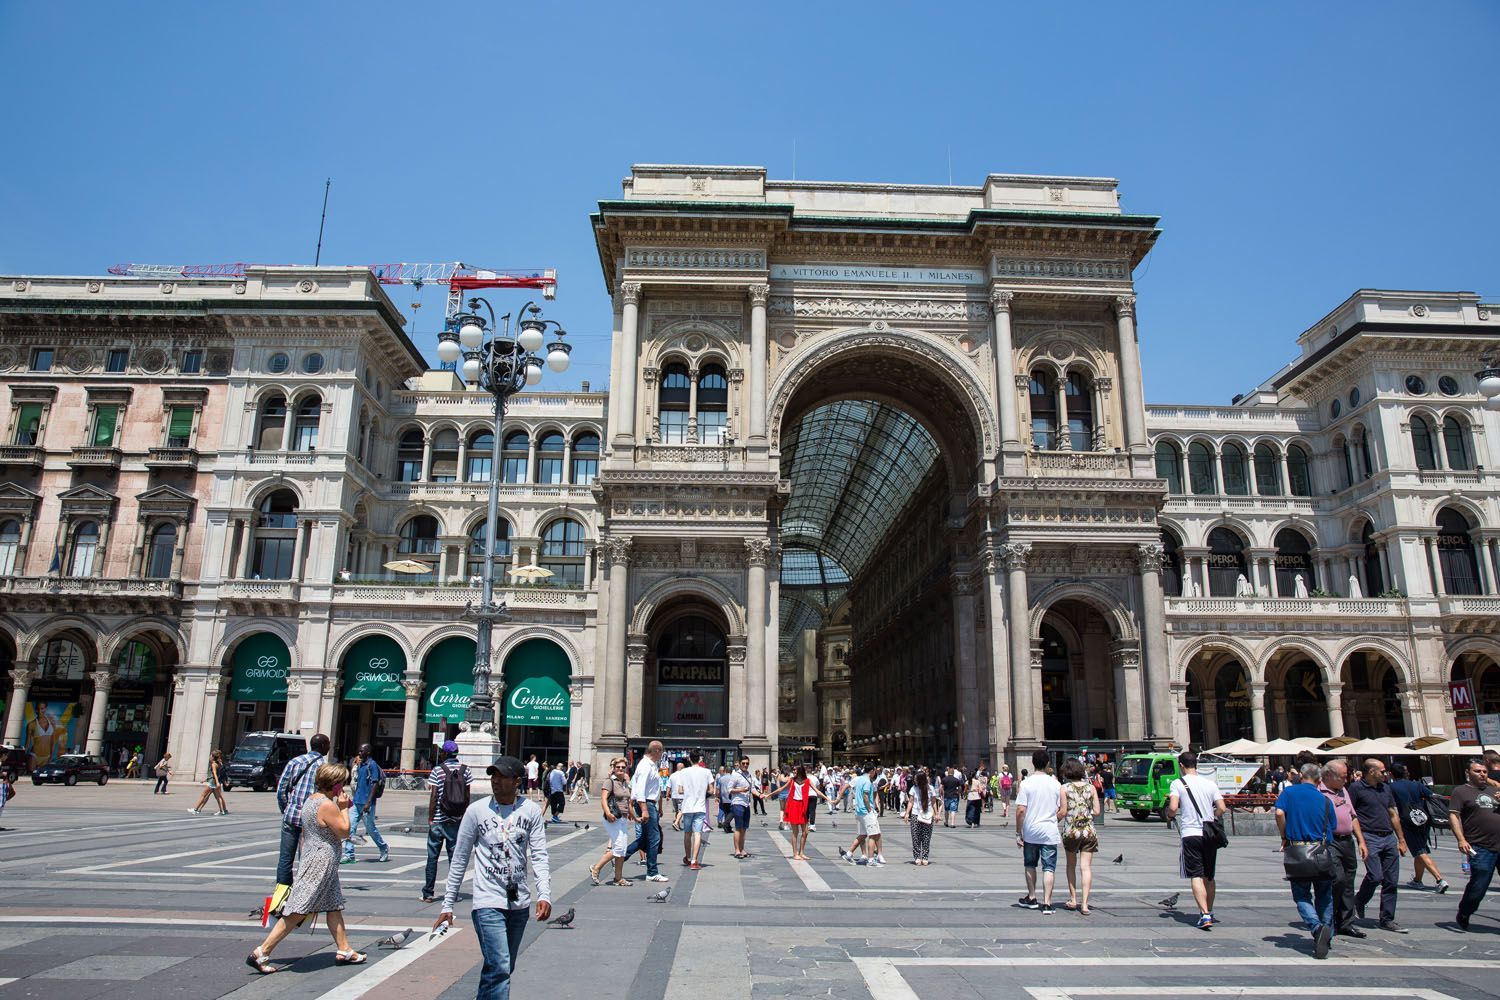 Galleria day trip to Milan